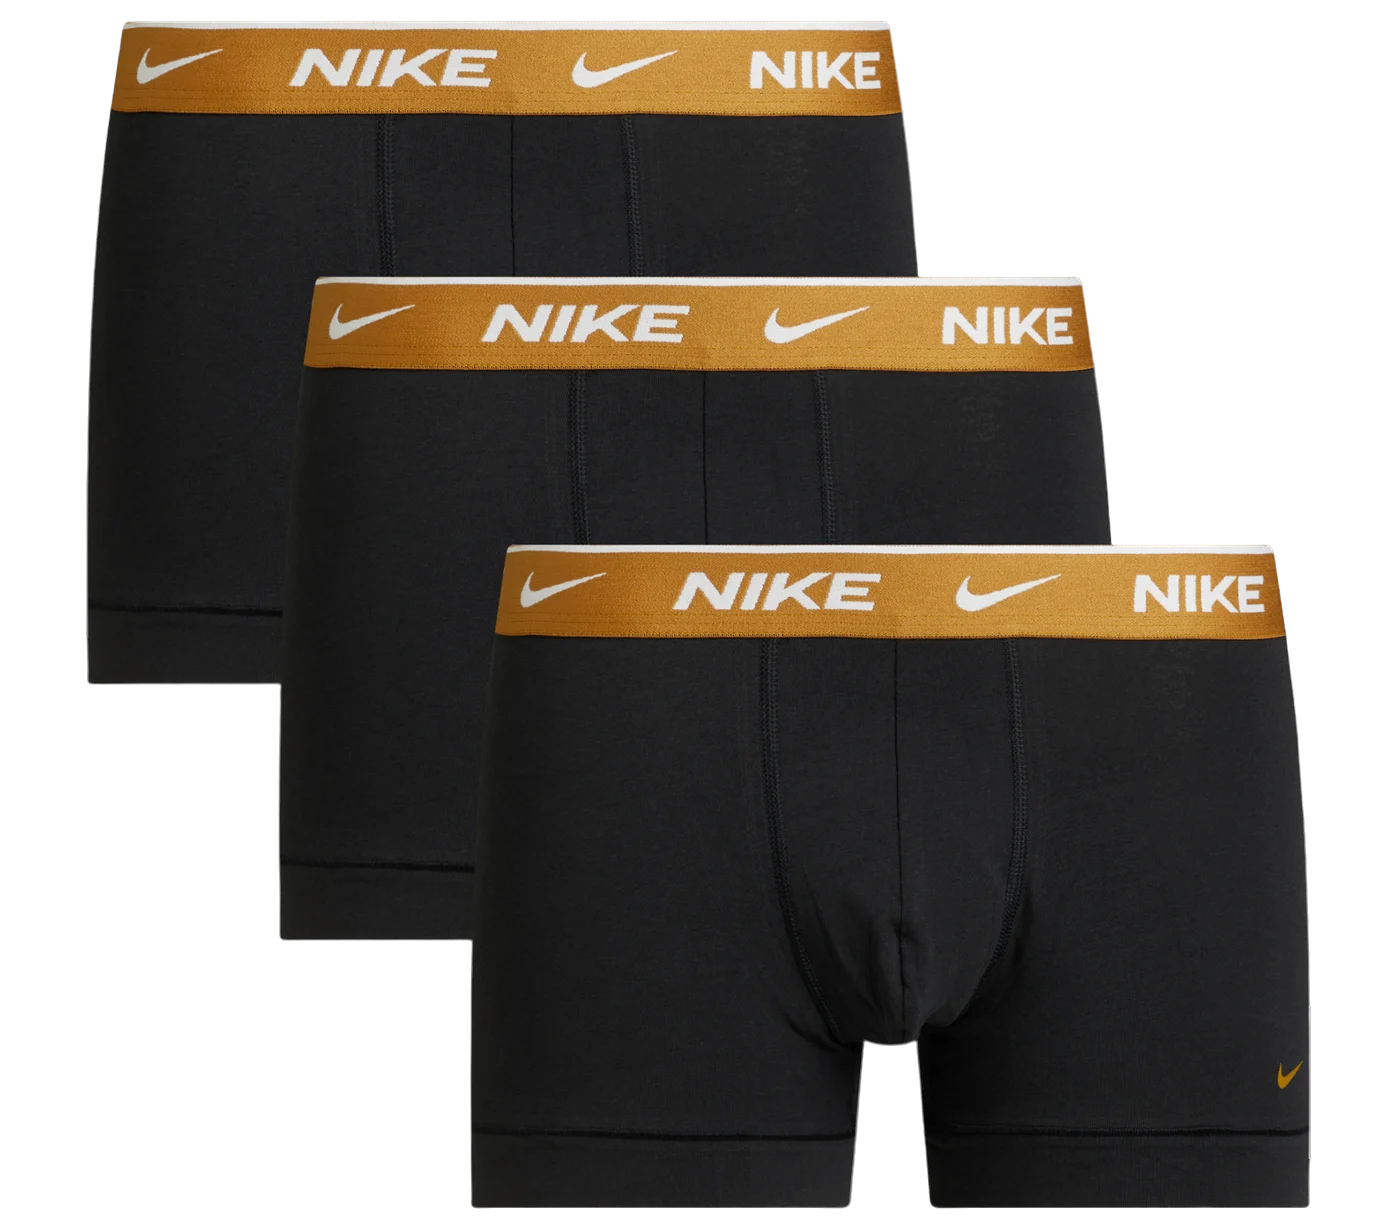 Boxers Nike TRUNK 3PK